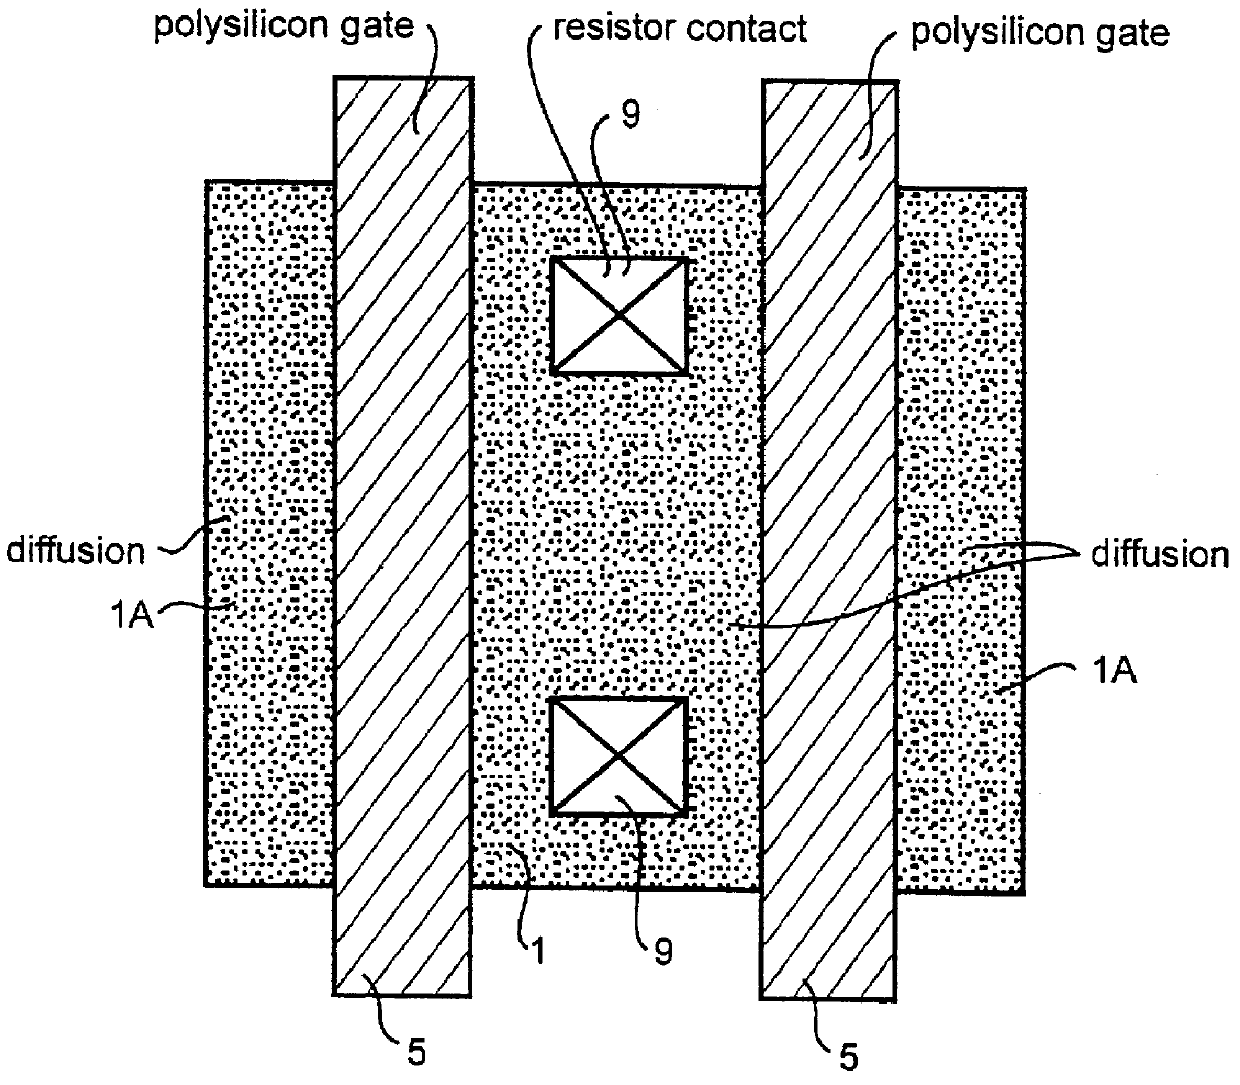 Polysilicon defined diffused resistor